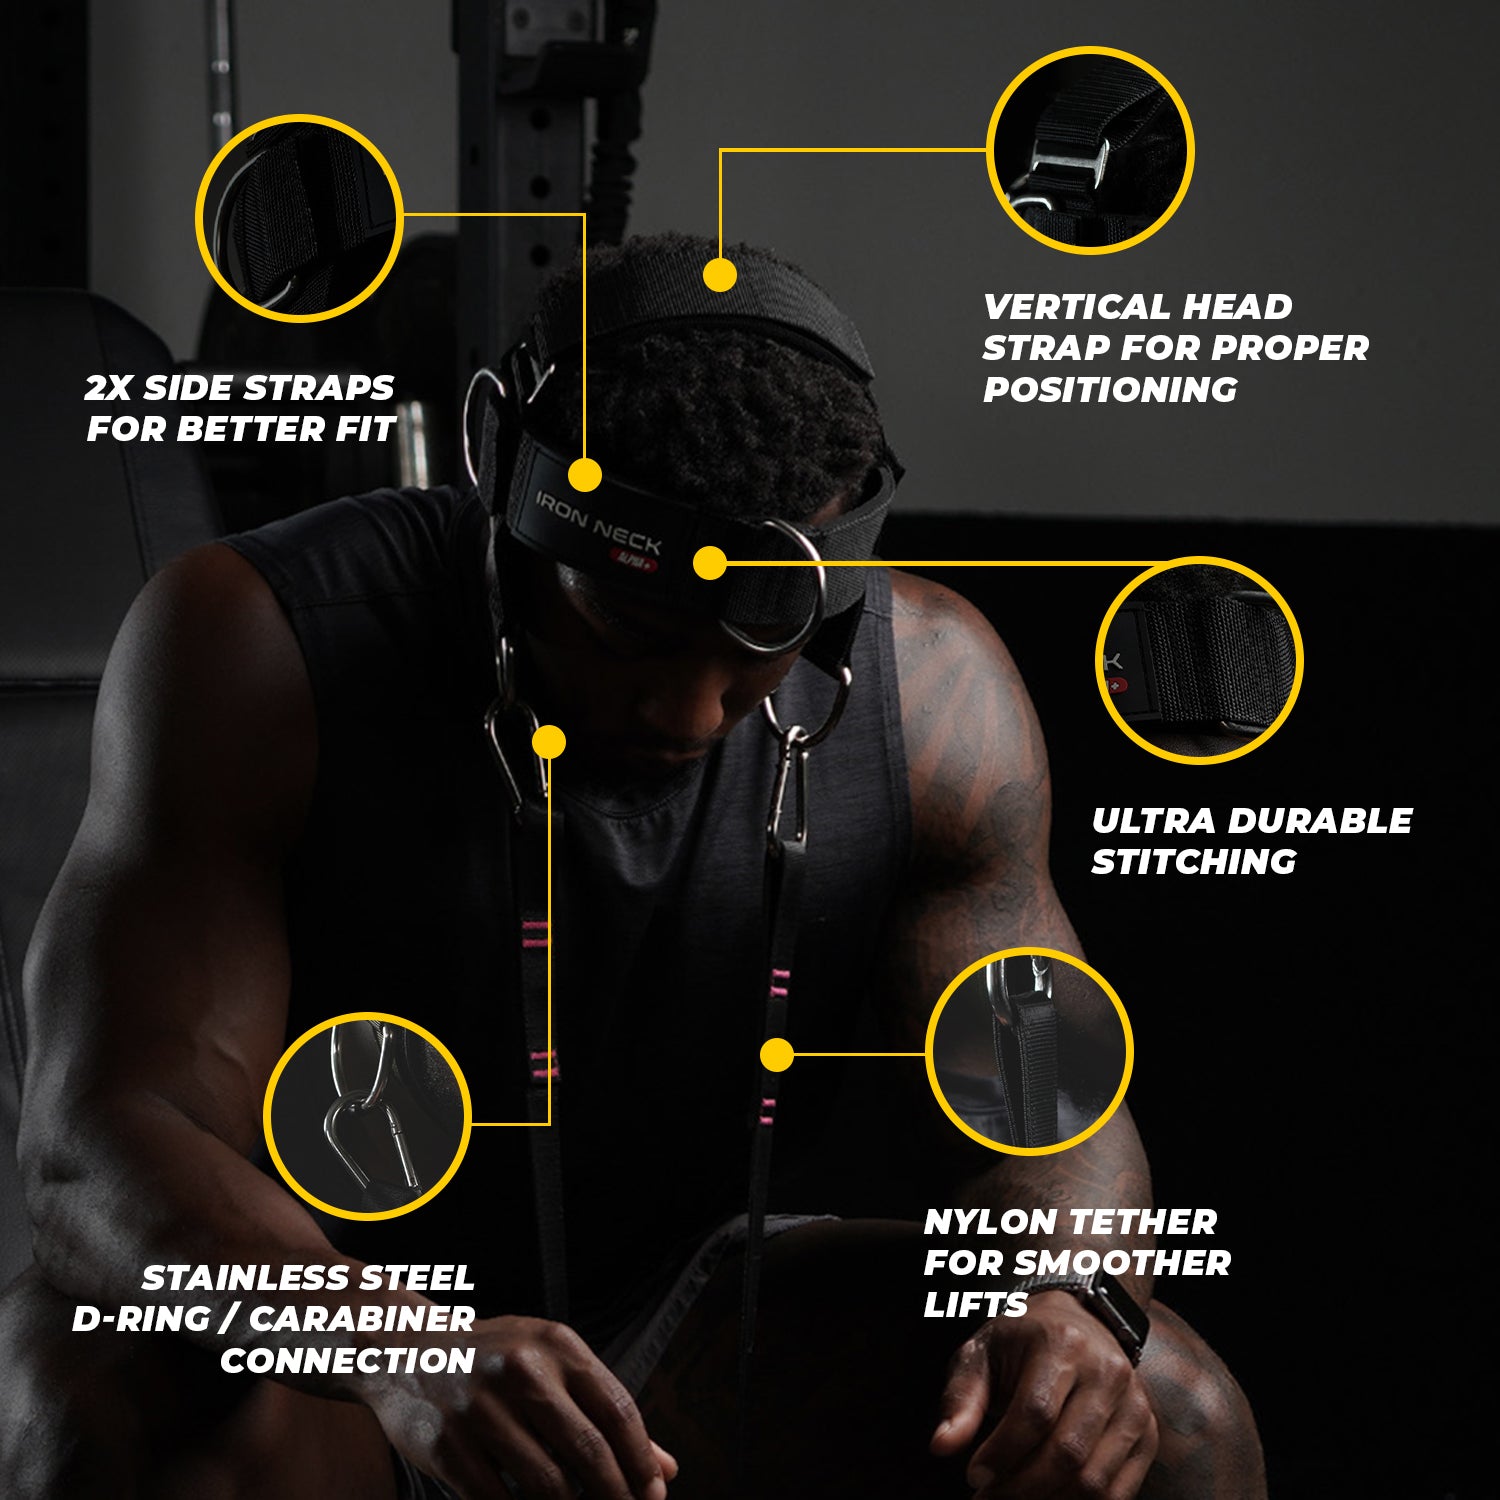  Iron Neck Alpha Harness - Improve Neck Strength